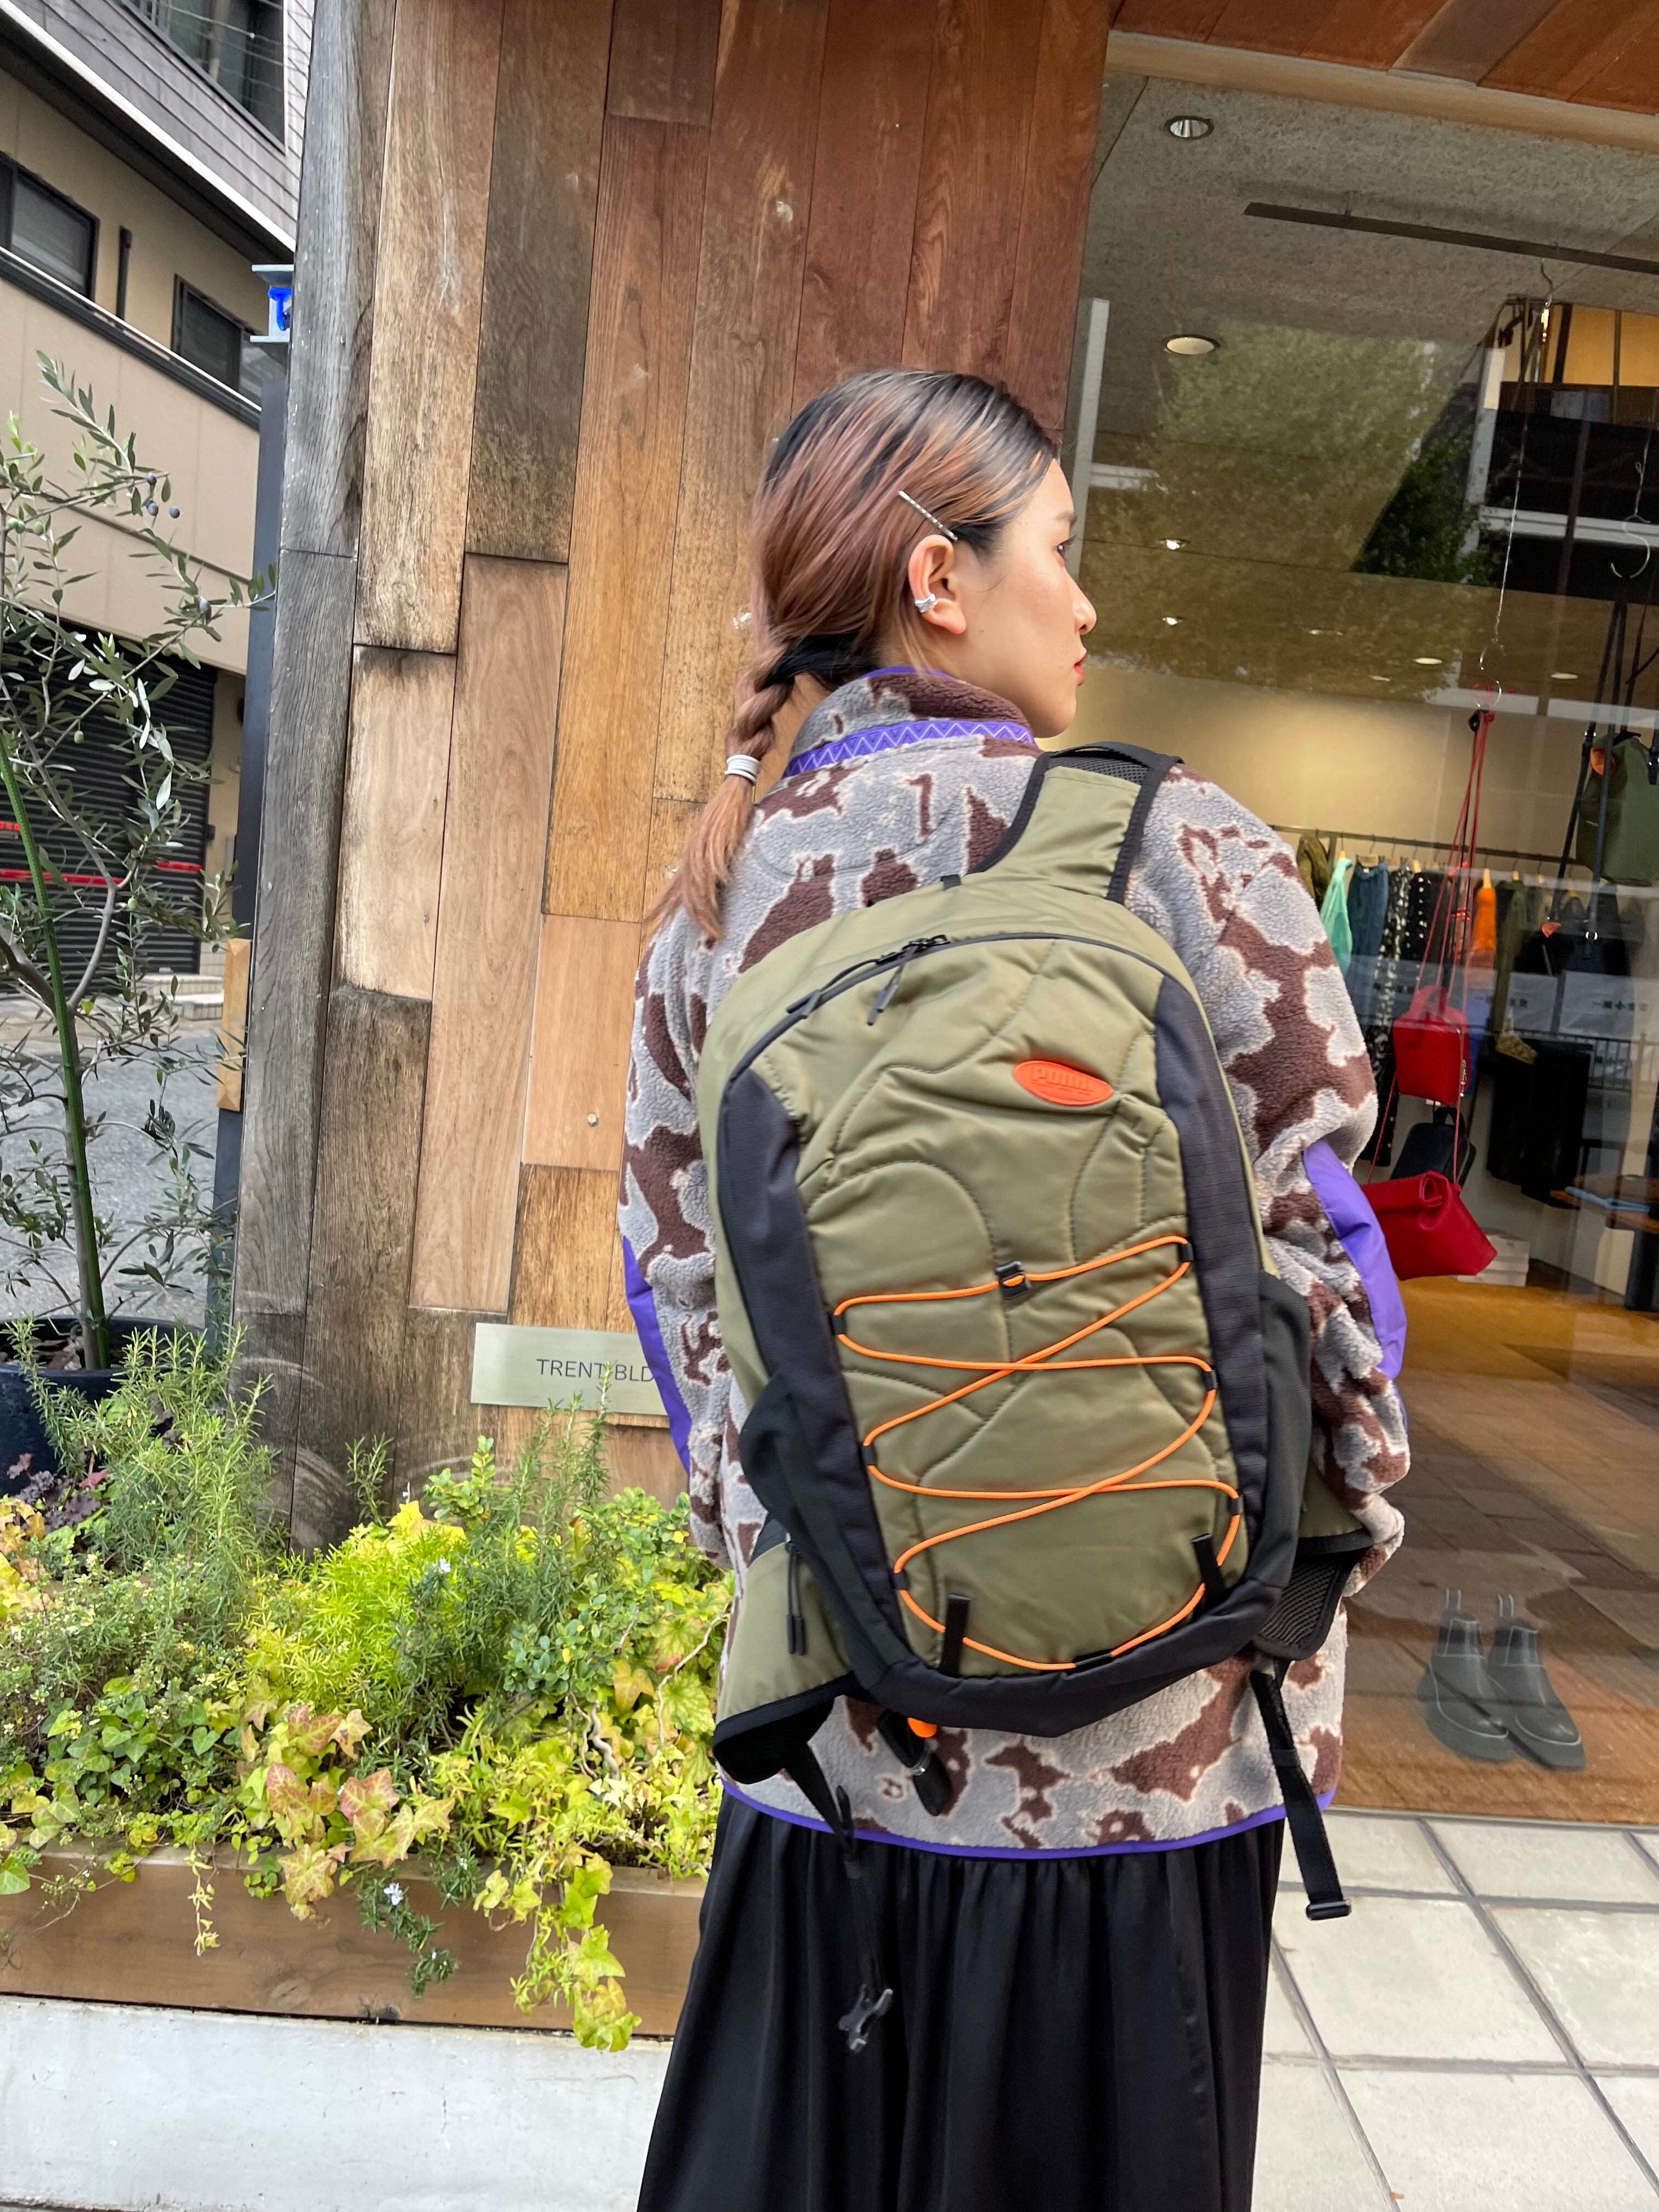 PUMA Hike Backpack(FENTY collection)